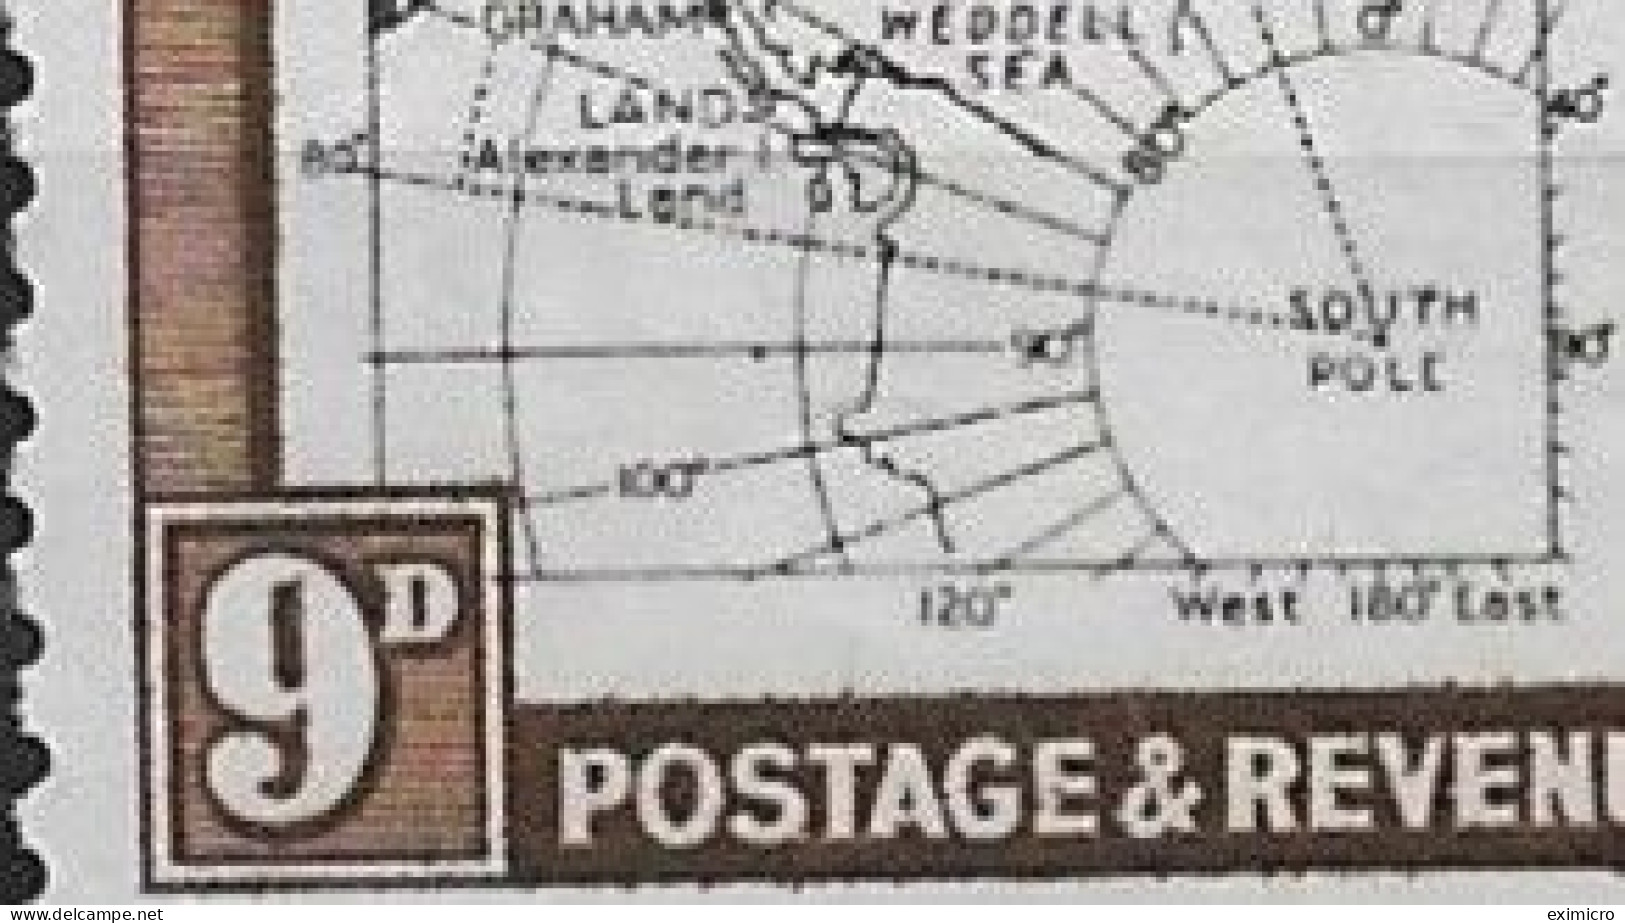 FALKLAND ISLANDS DEPENDENCIES 1948 9d SG G15a " 'Dot In 'T' " Variety VERY LIGHTLY MOUNTEDMINT Cat £55 - Falkland